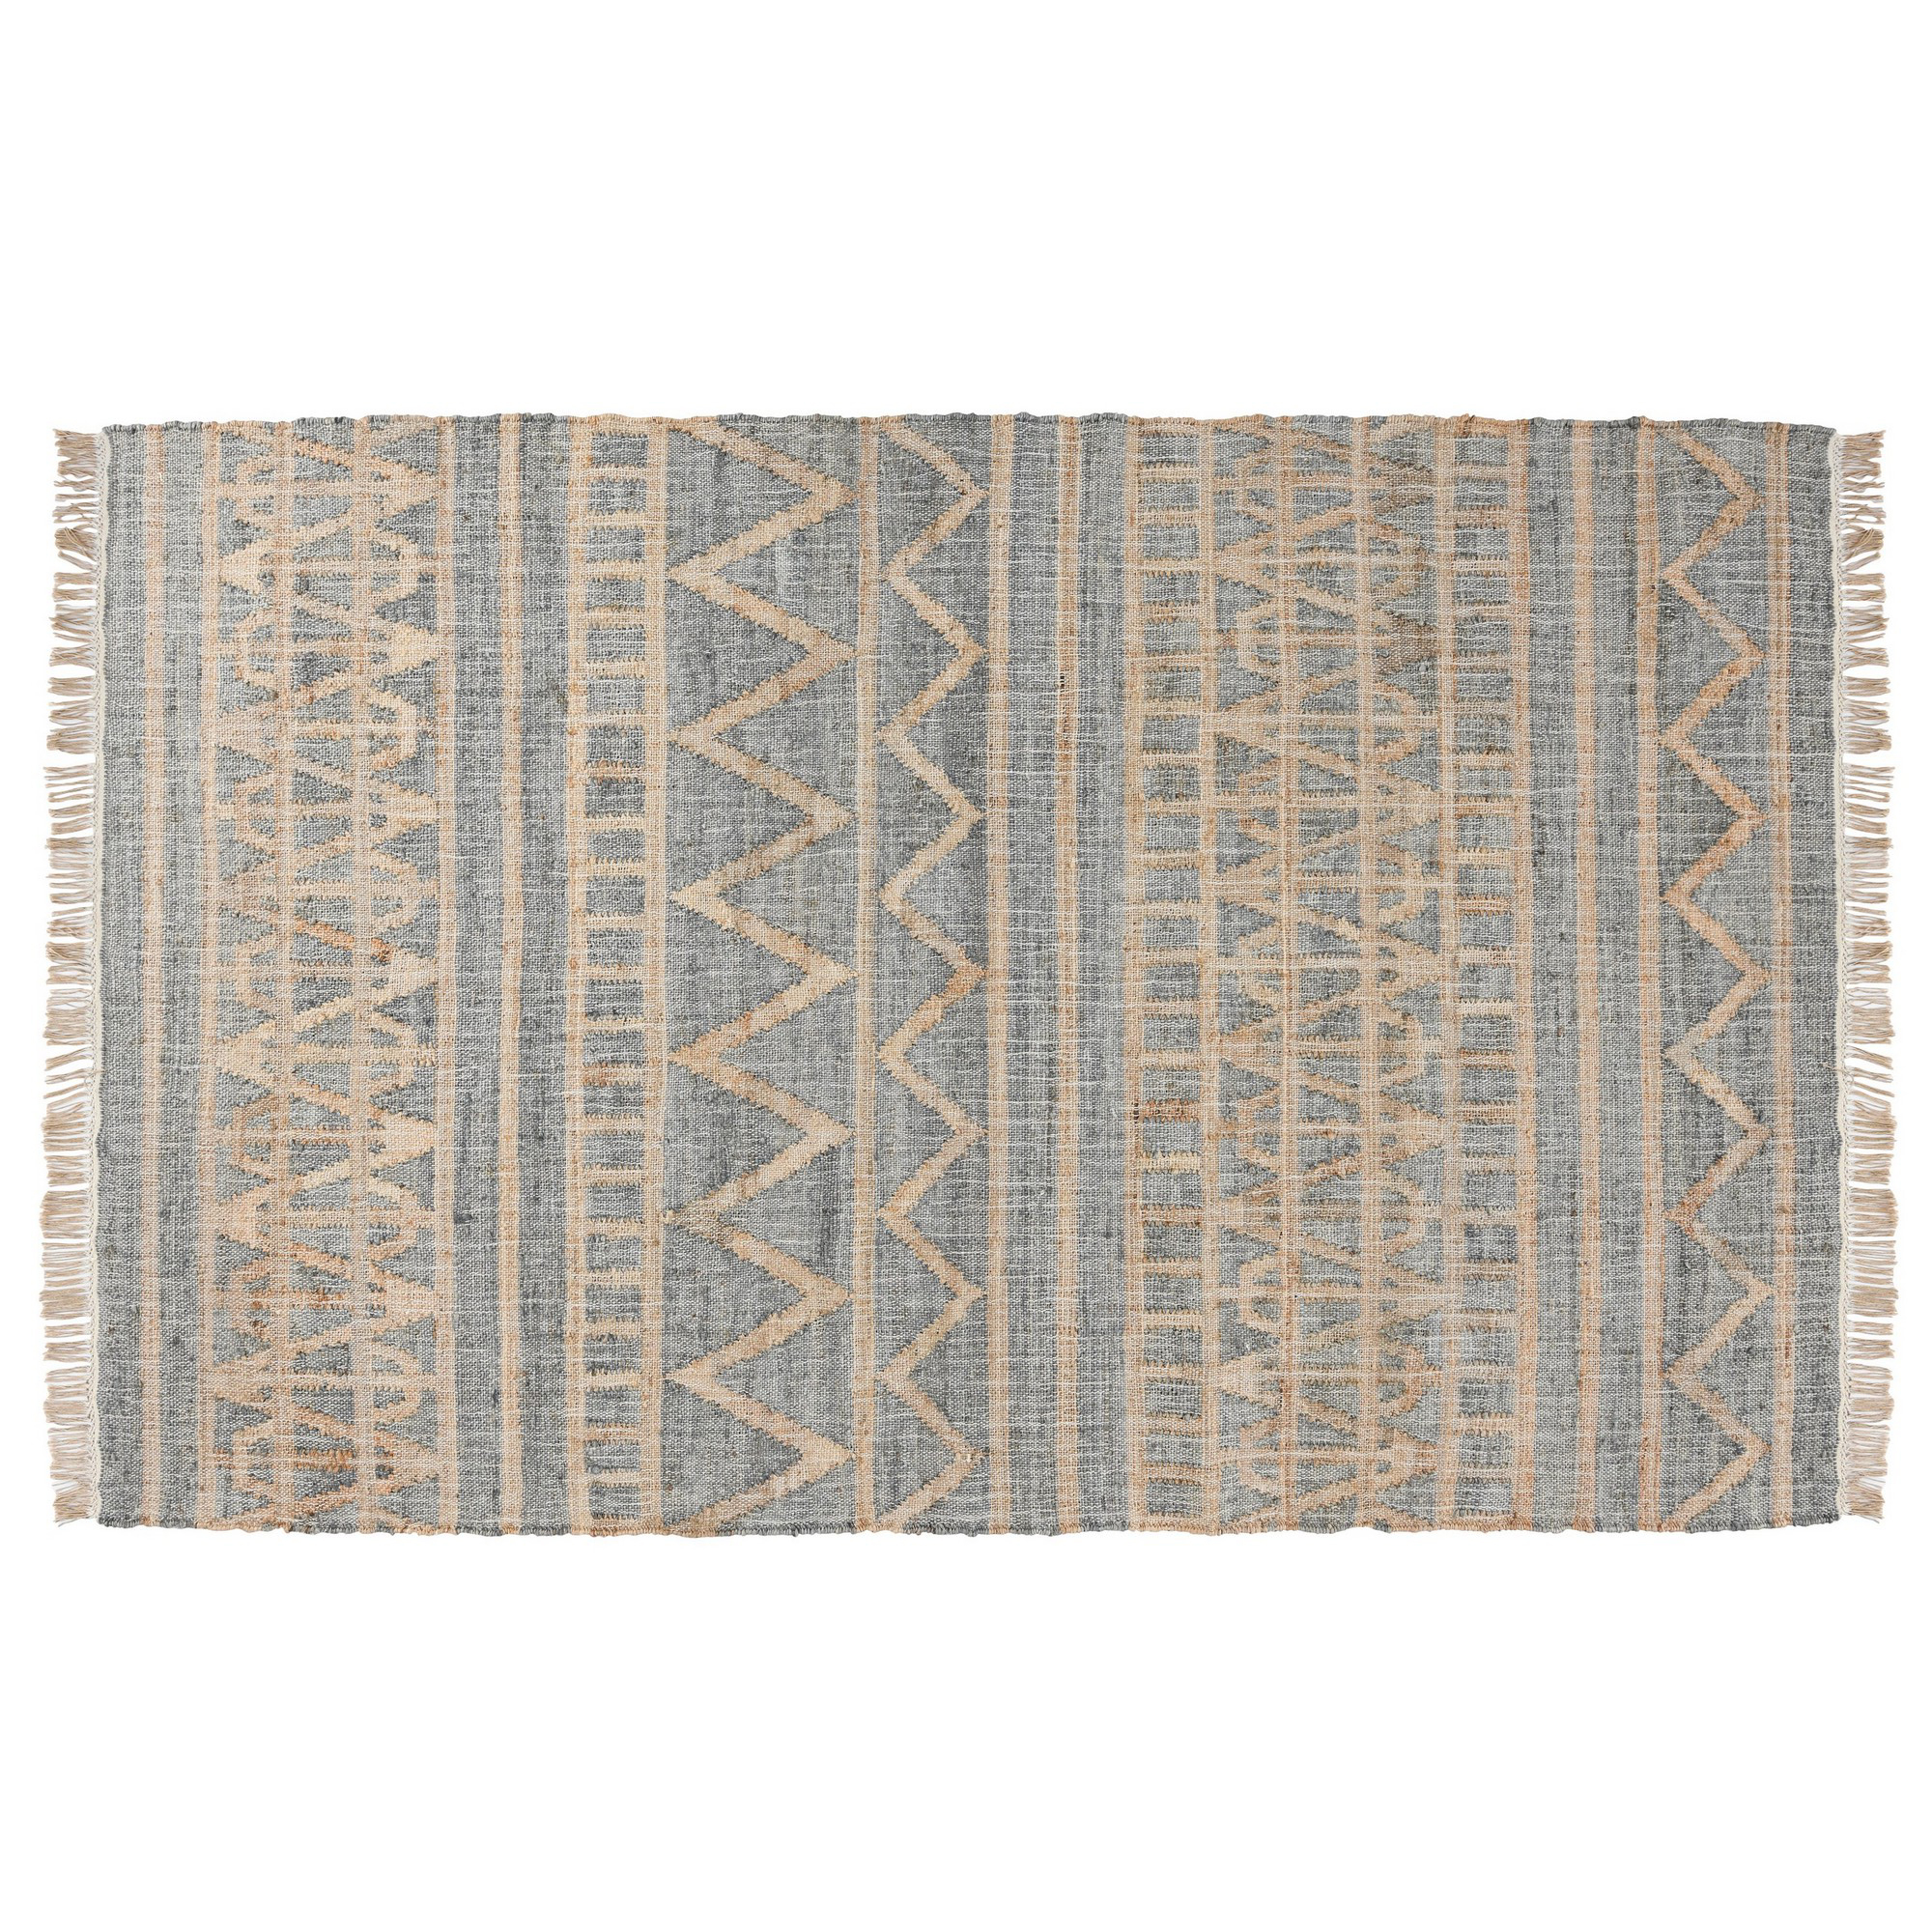 Myra 3 X 8 Area Rug, Soft Handwoven Moroccan Pattern, Brown And Blue Jute- Saltoro Sherpi